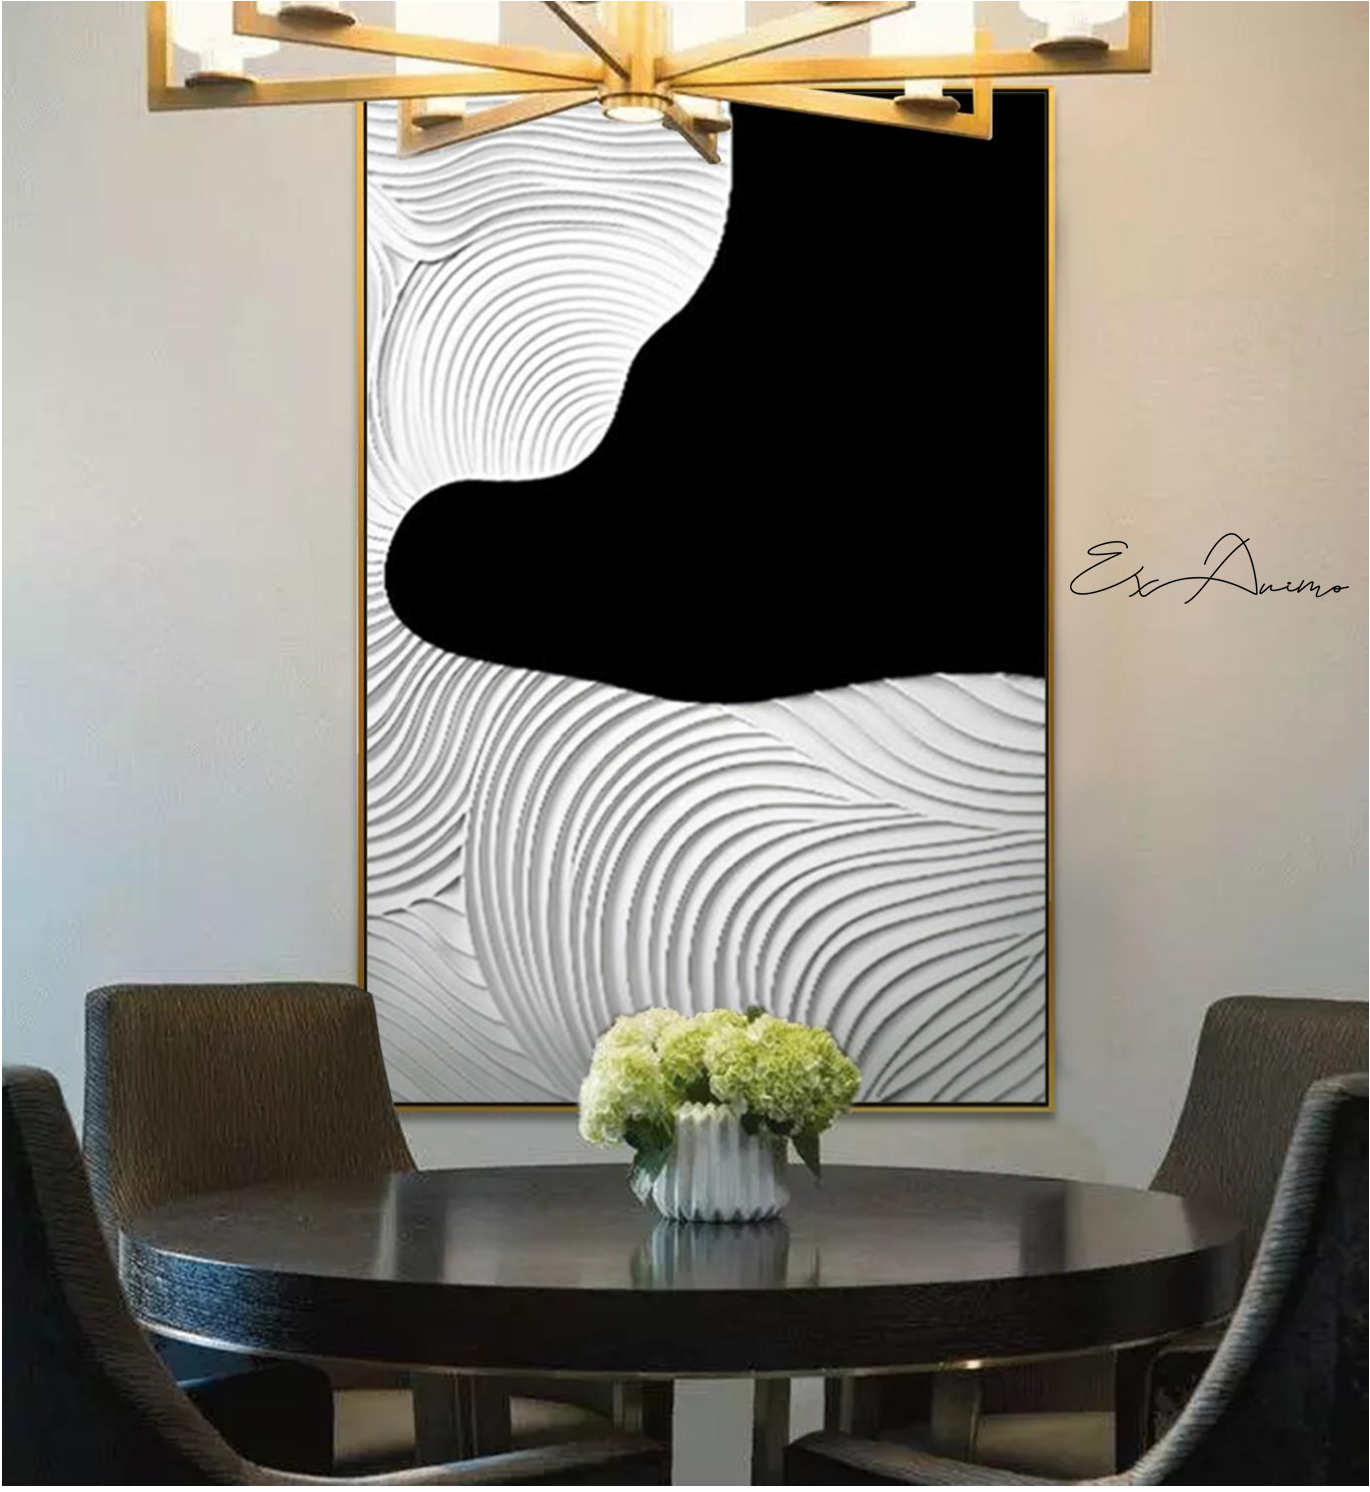 Ex Animo Designs - Three Dimensional Handmade Black and White Wall Art